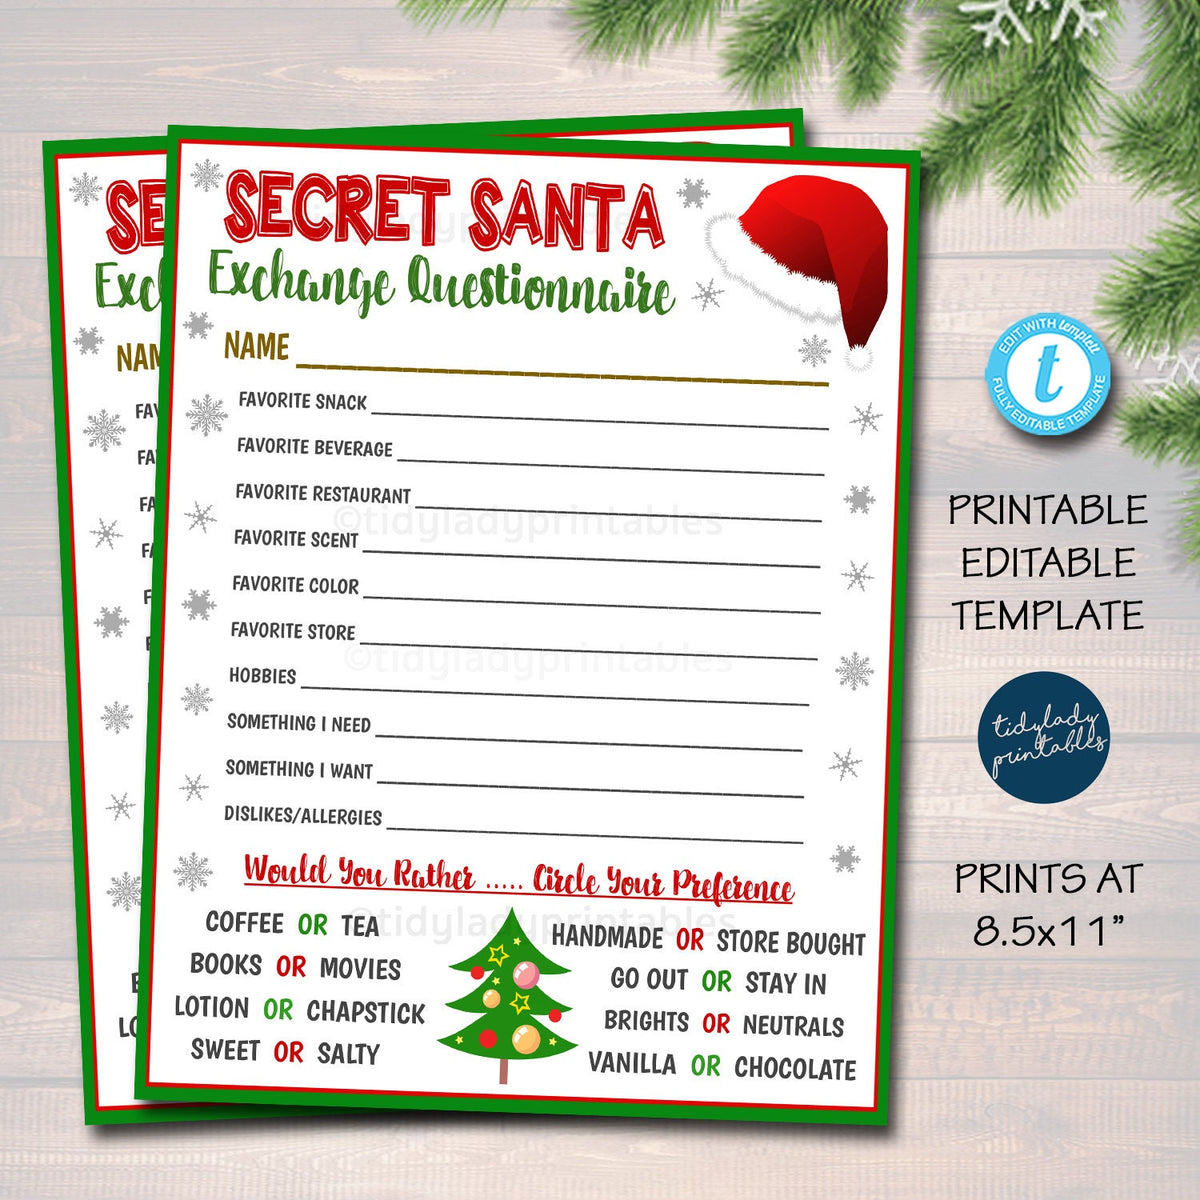 secret-santa-gift-exchange-printable-editable-template-tidylady-printables